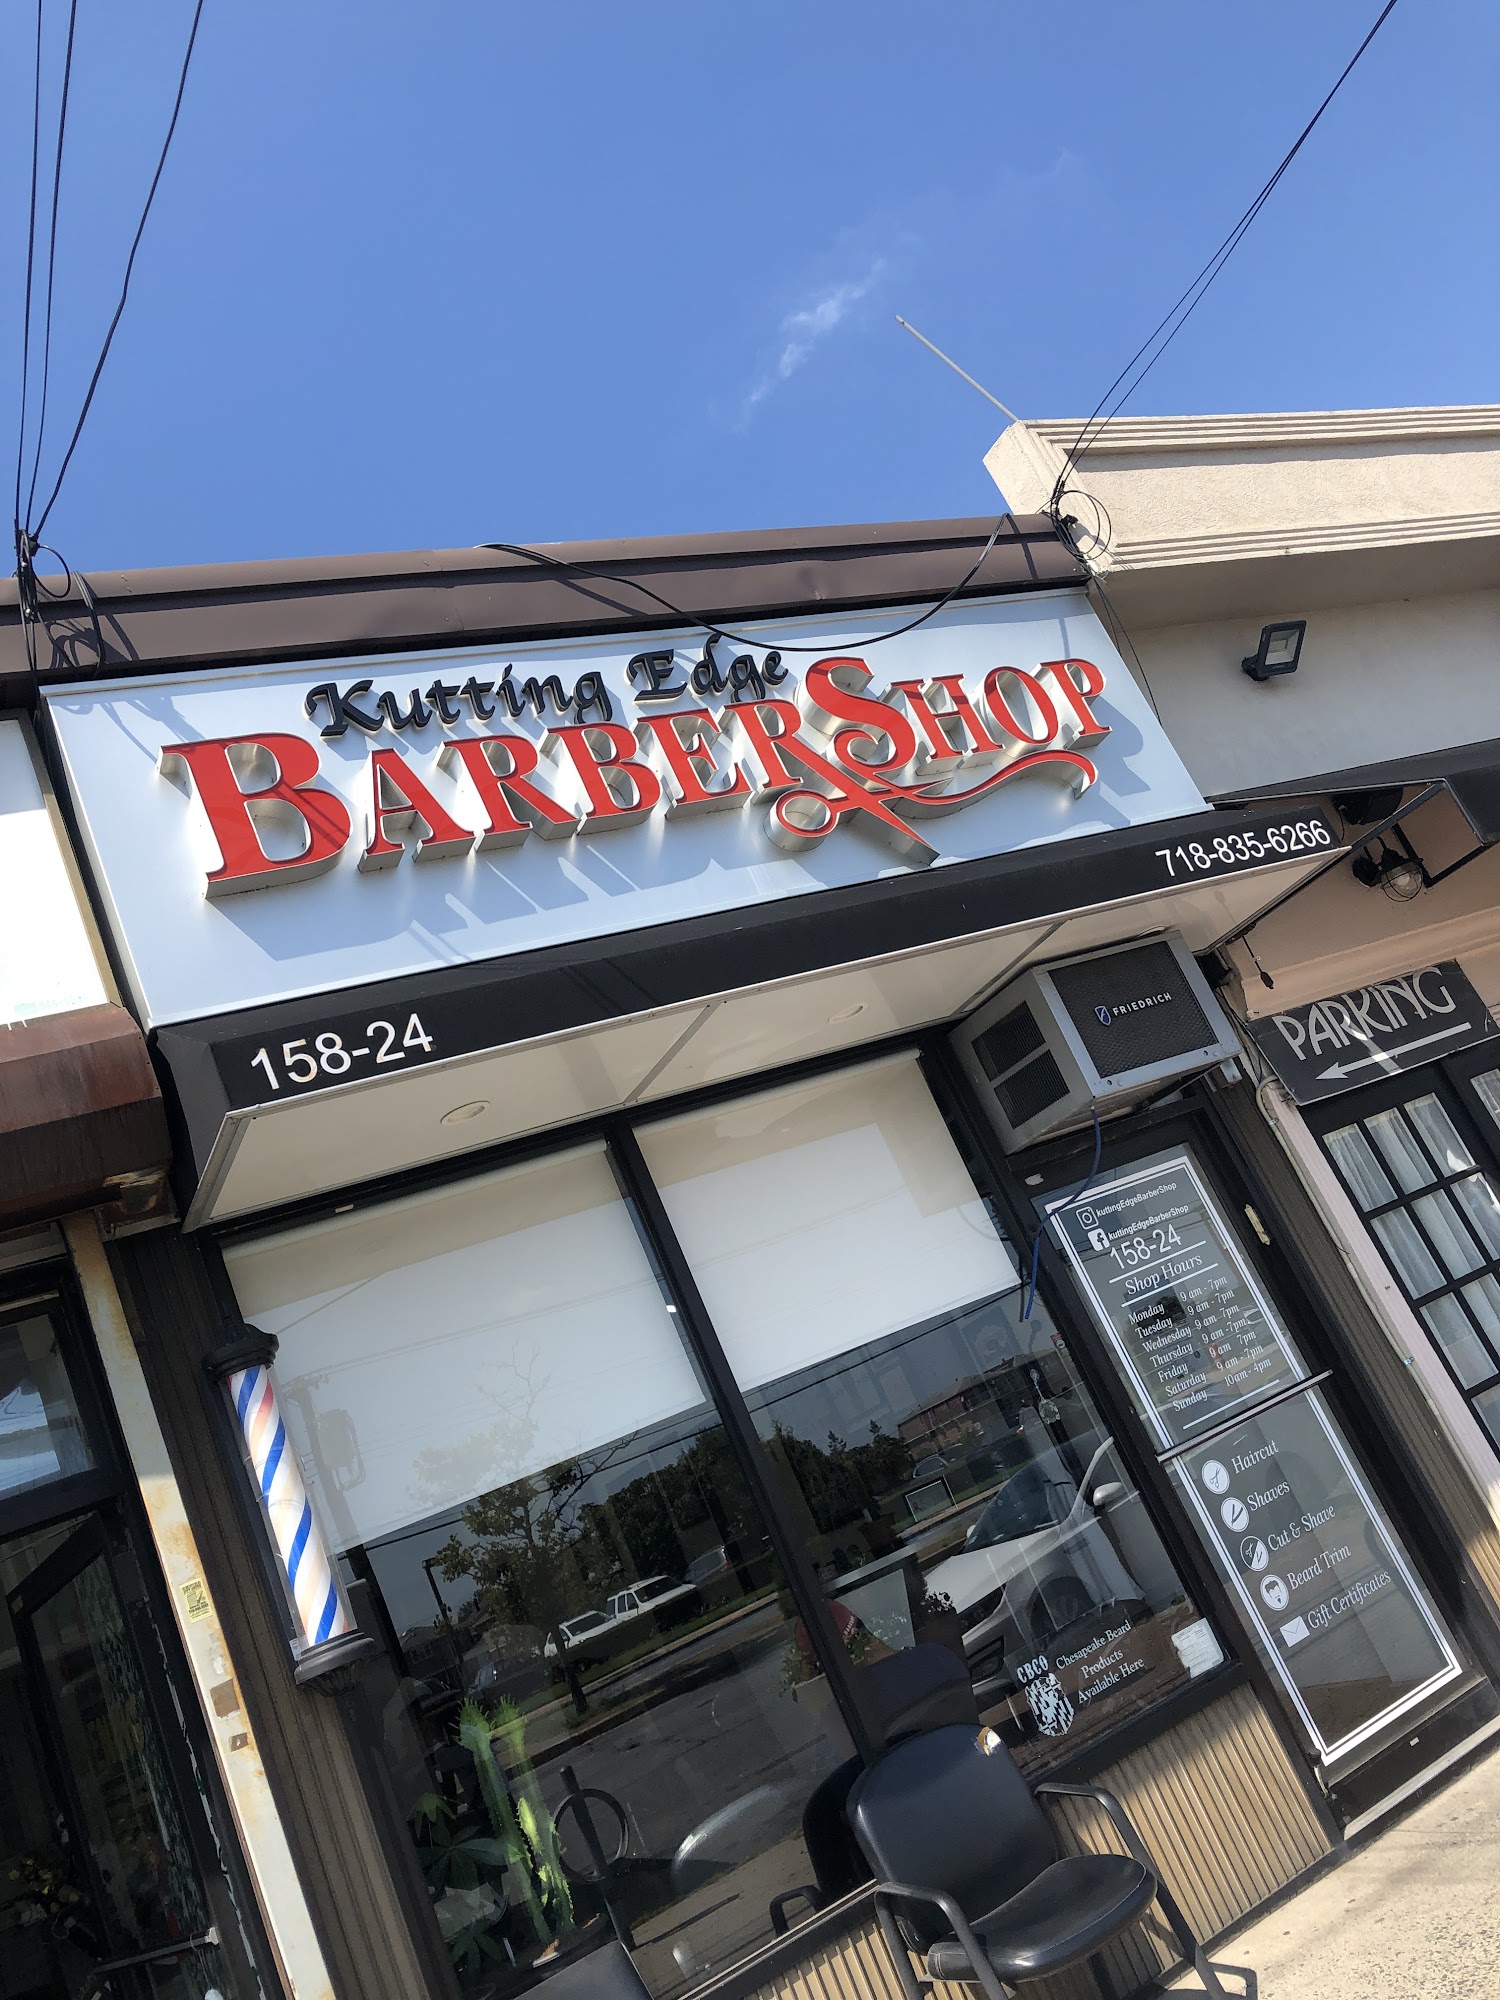 Kutting edge barbershop